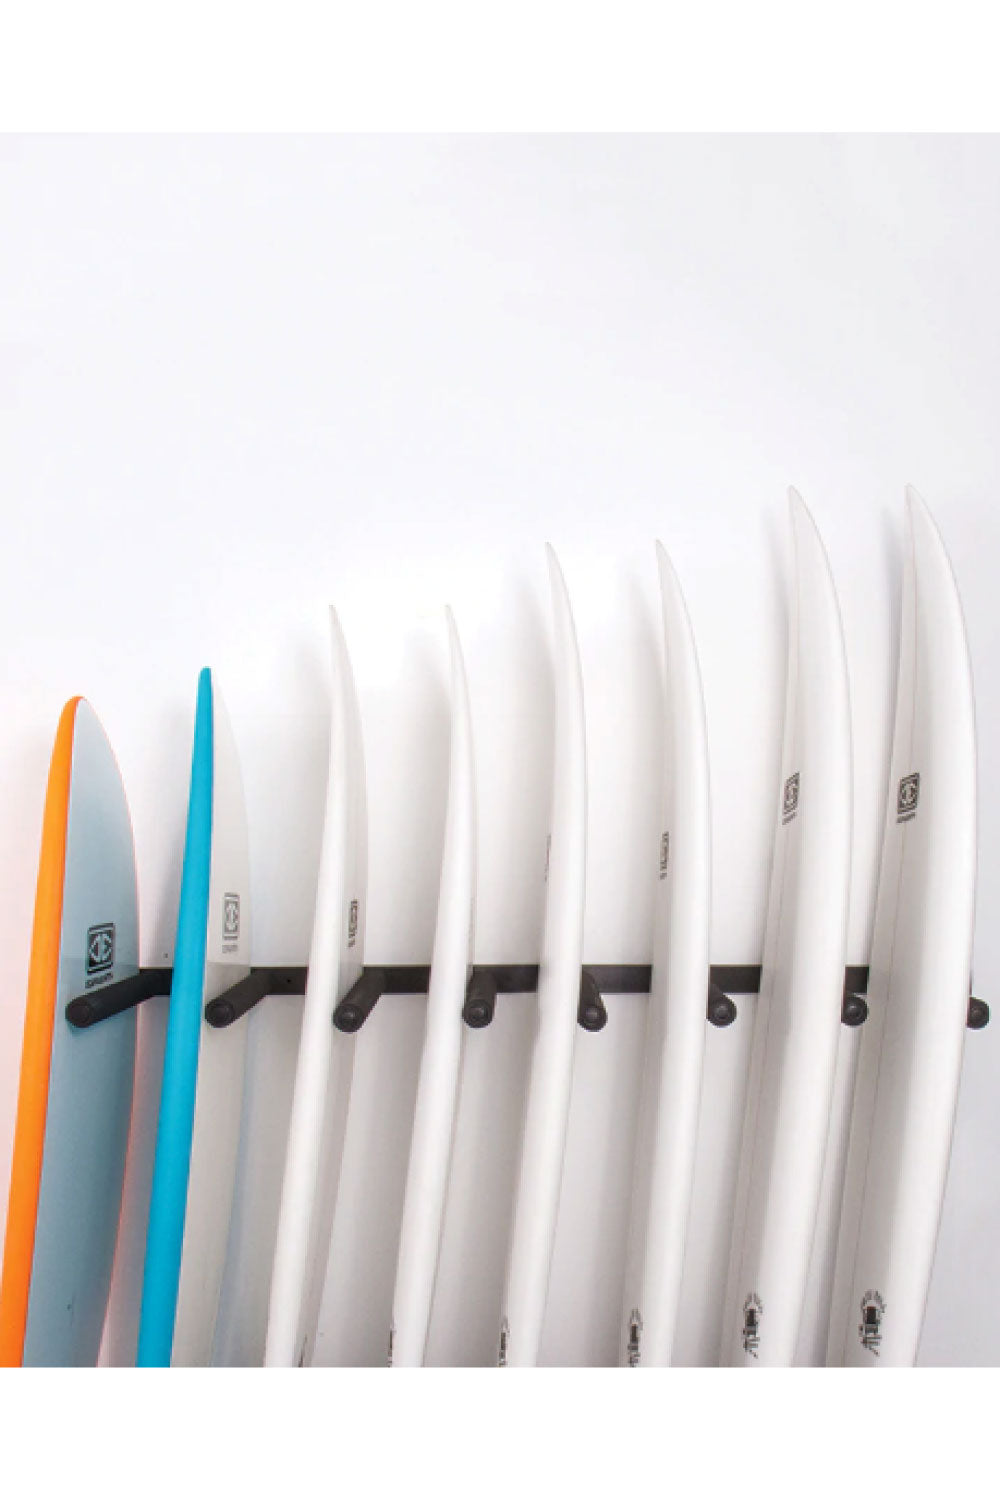 Ocean and Earth Stack Racks Fits 4-8 Boards | SurfBoard Racks For Garage